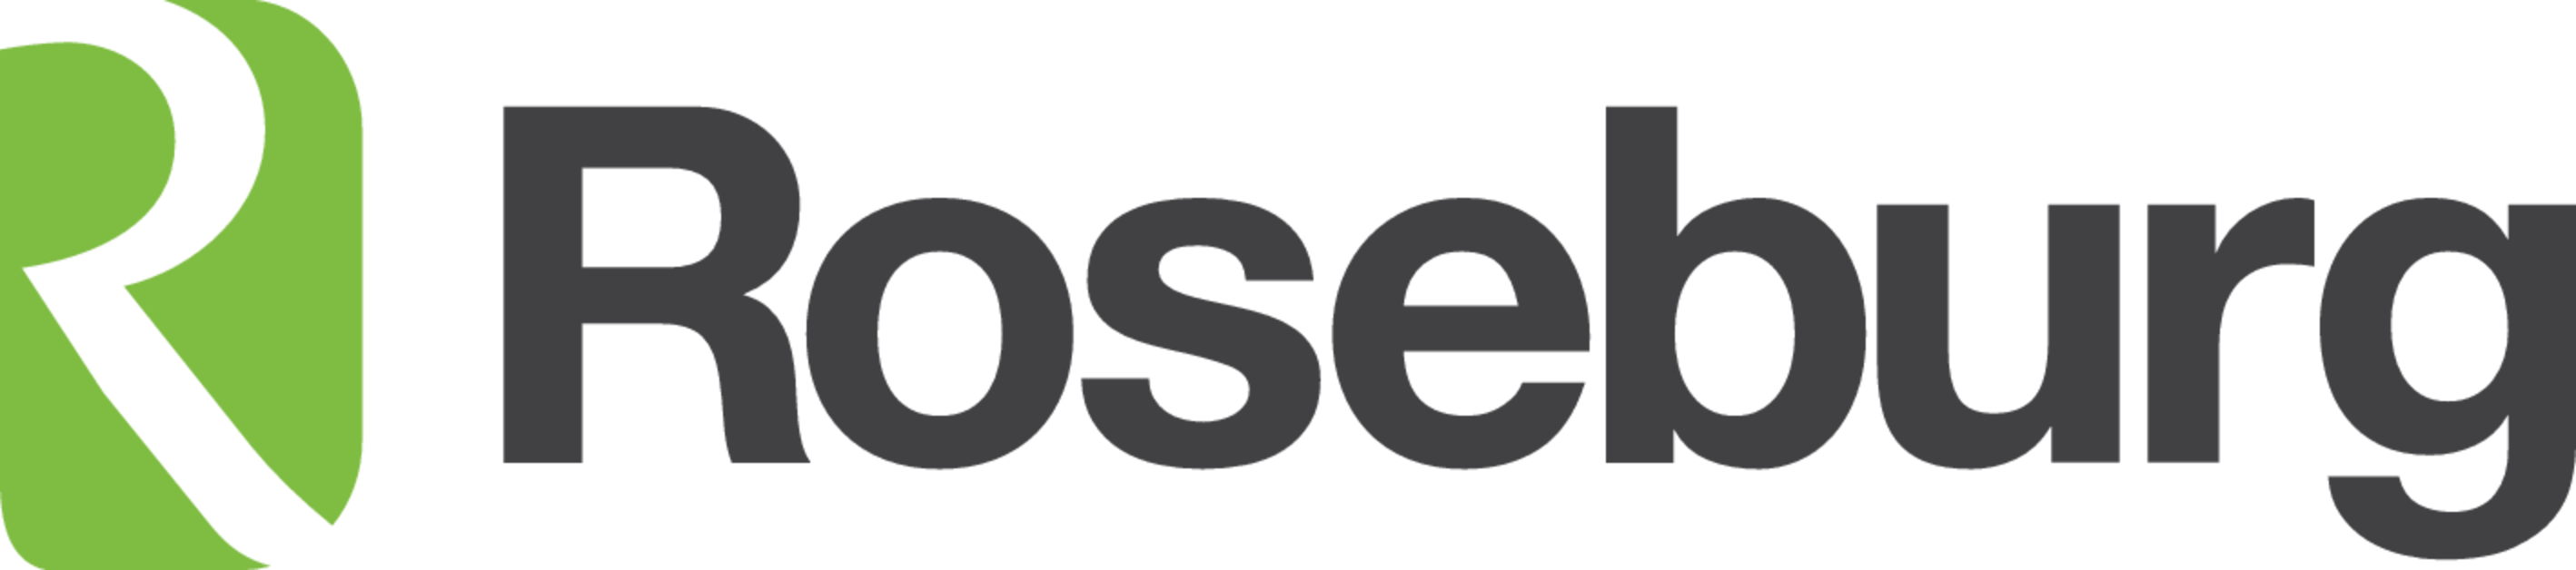 Roseburg master logo